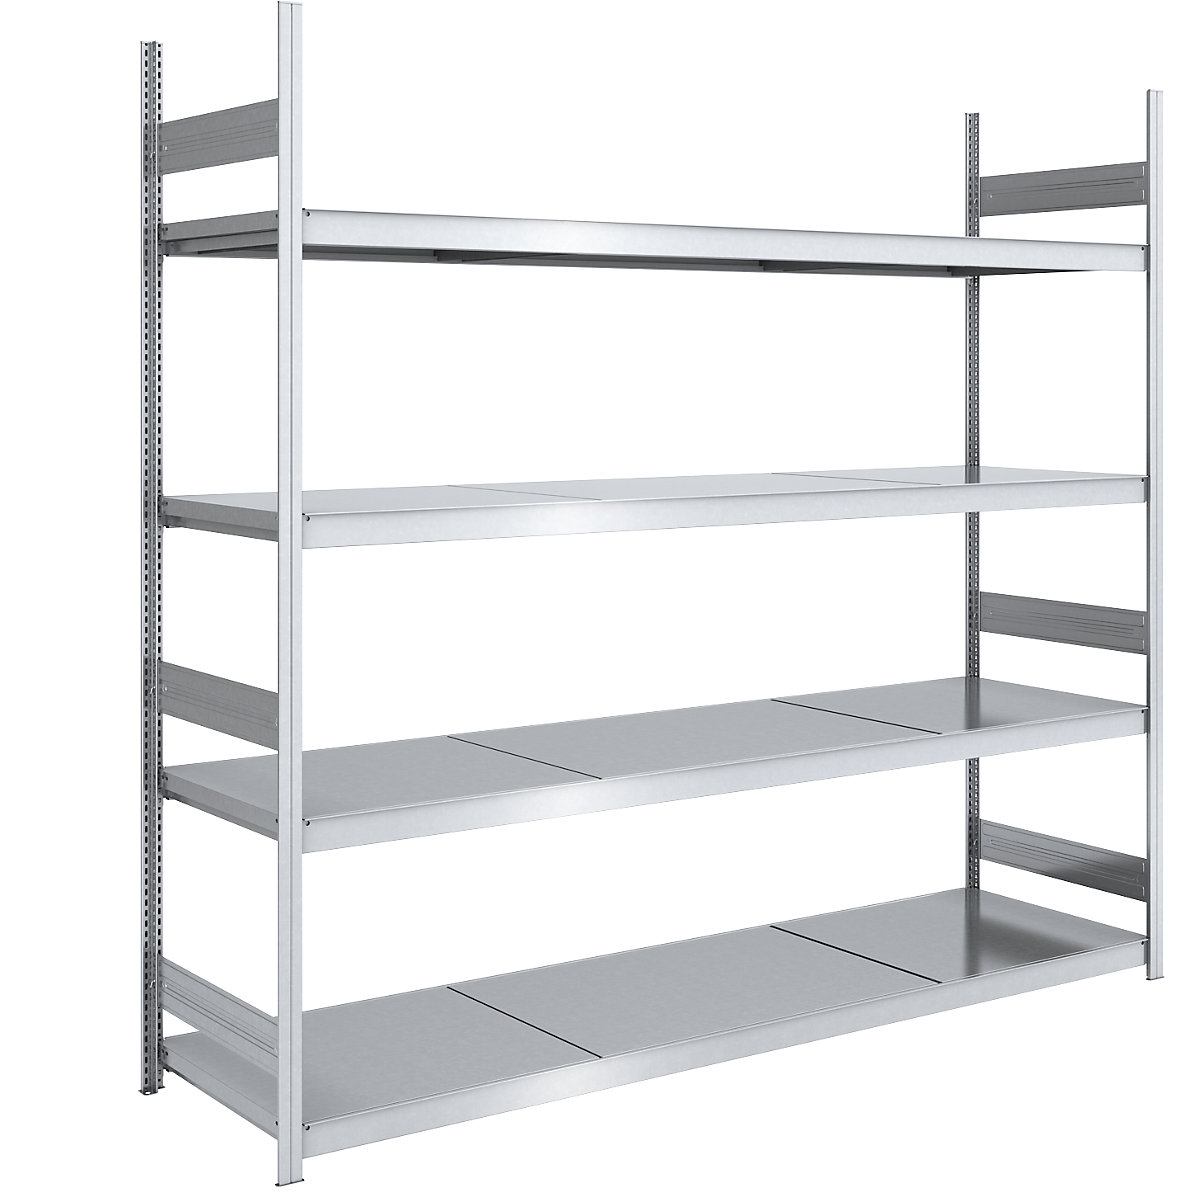 Wide span boltless shelving unit with steel shelves – hofe, height 2500 mm, shelf width 2500 mm, shelf depth 800 mm, standard shelf unit